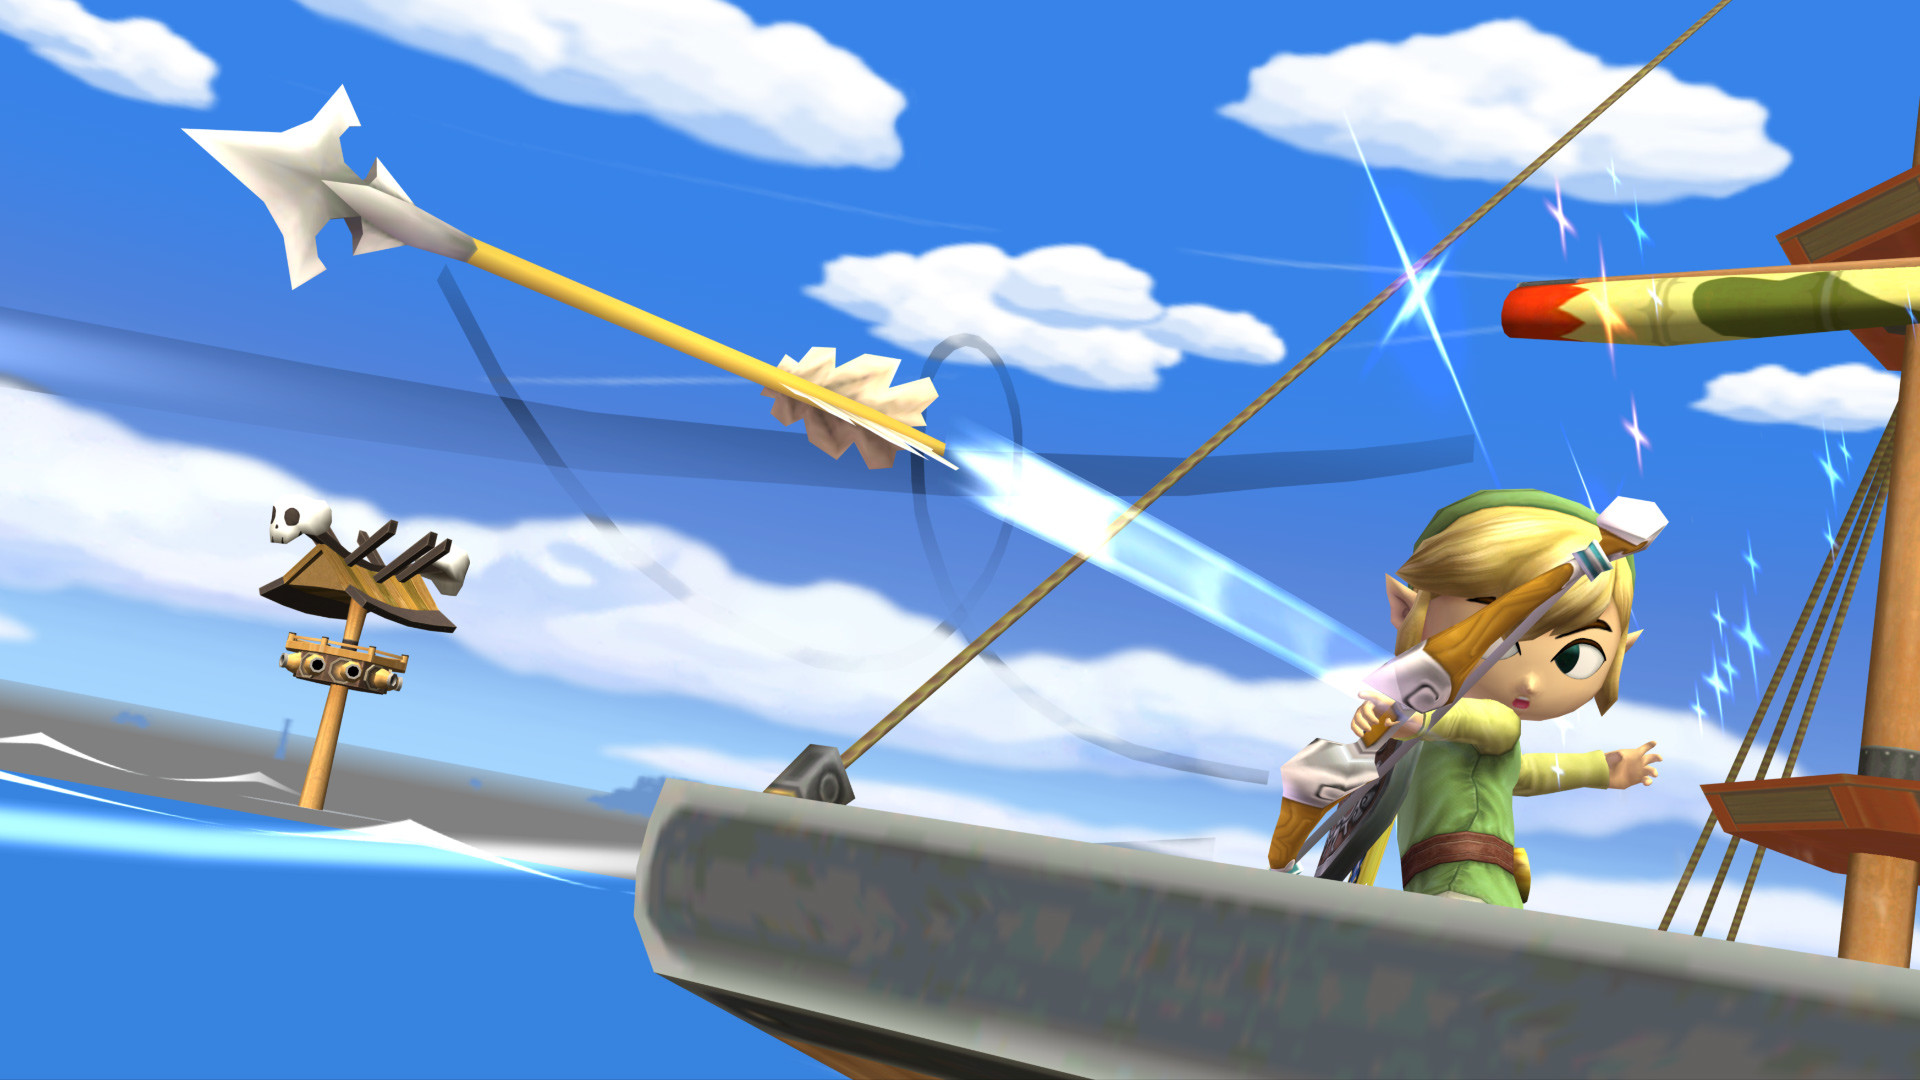 1920x1080 ... The Legend of Zelda: The Wind Waker - Fanart - Background ...